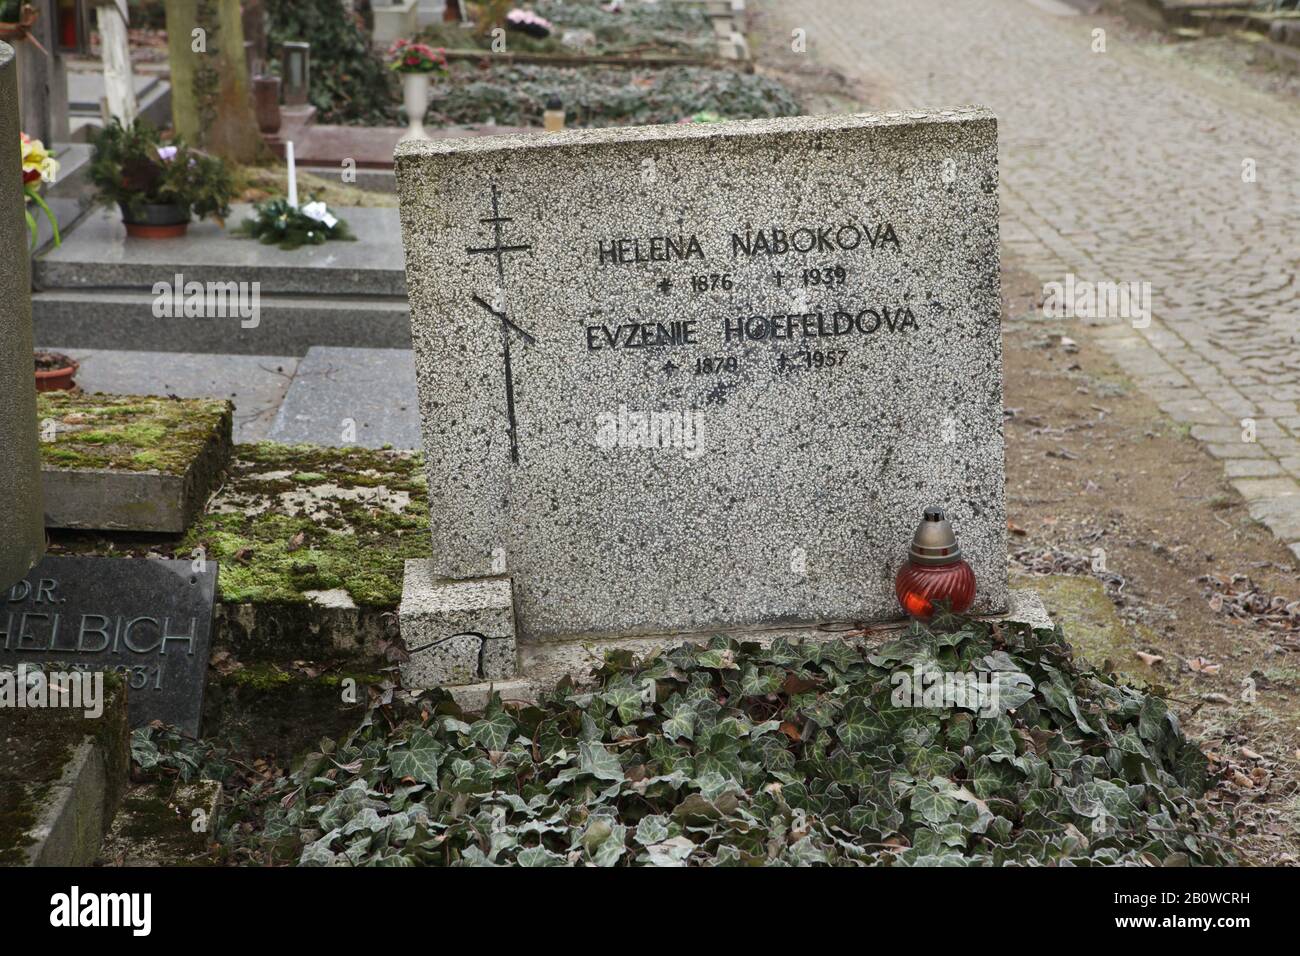 Grave of Yelena Nabokova, née. Rukavishnikova (1878-1939), who was a mother of famous Russian novelist Vladimir Nabokov, at Olšany Cemetery in Prague, Czech Republic. Her housekeeper Evgenia Hofeld also spelled as Evženie Hoefeldová (1879-1957) is also buried in the same grave. Stock Photo